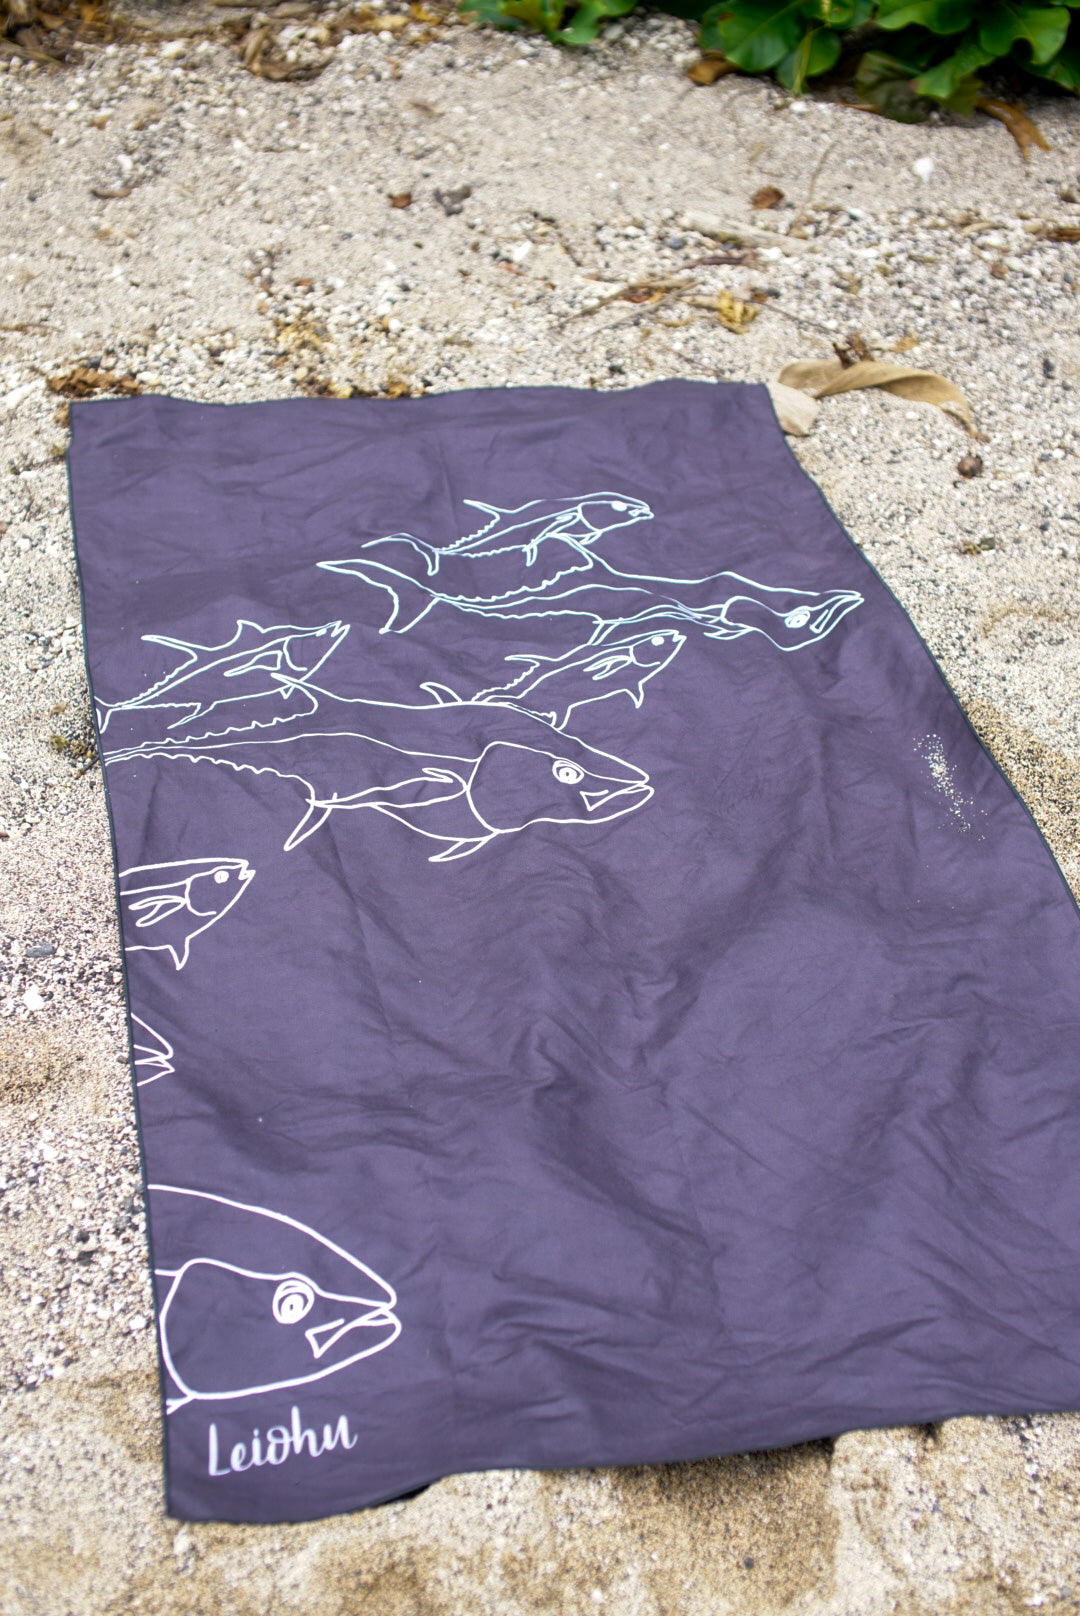 Microfiber Beach Towels